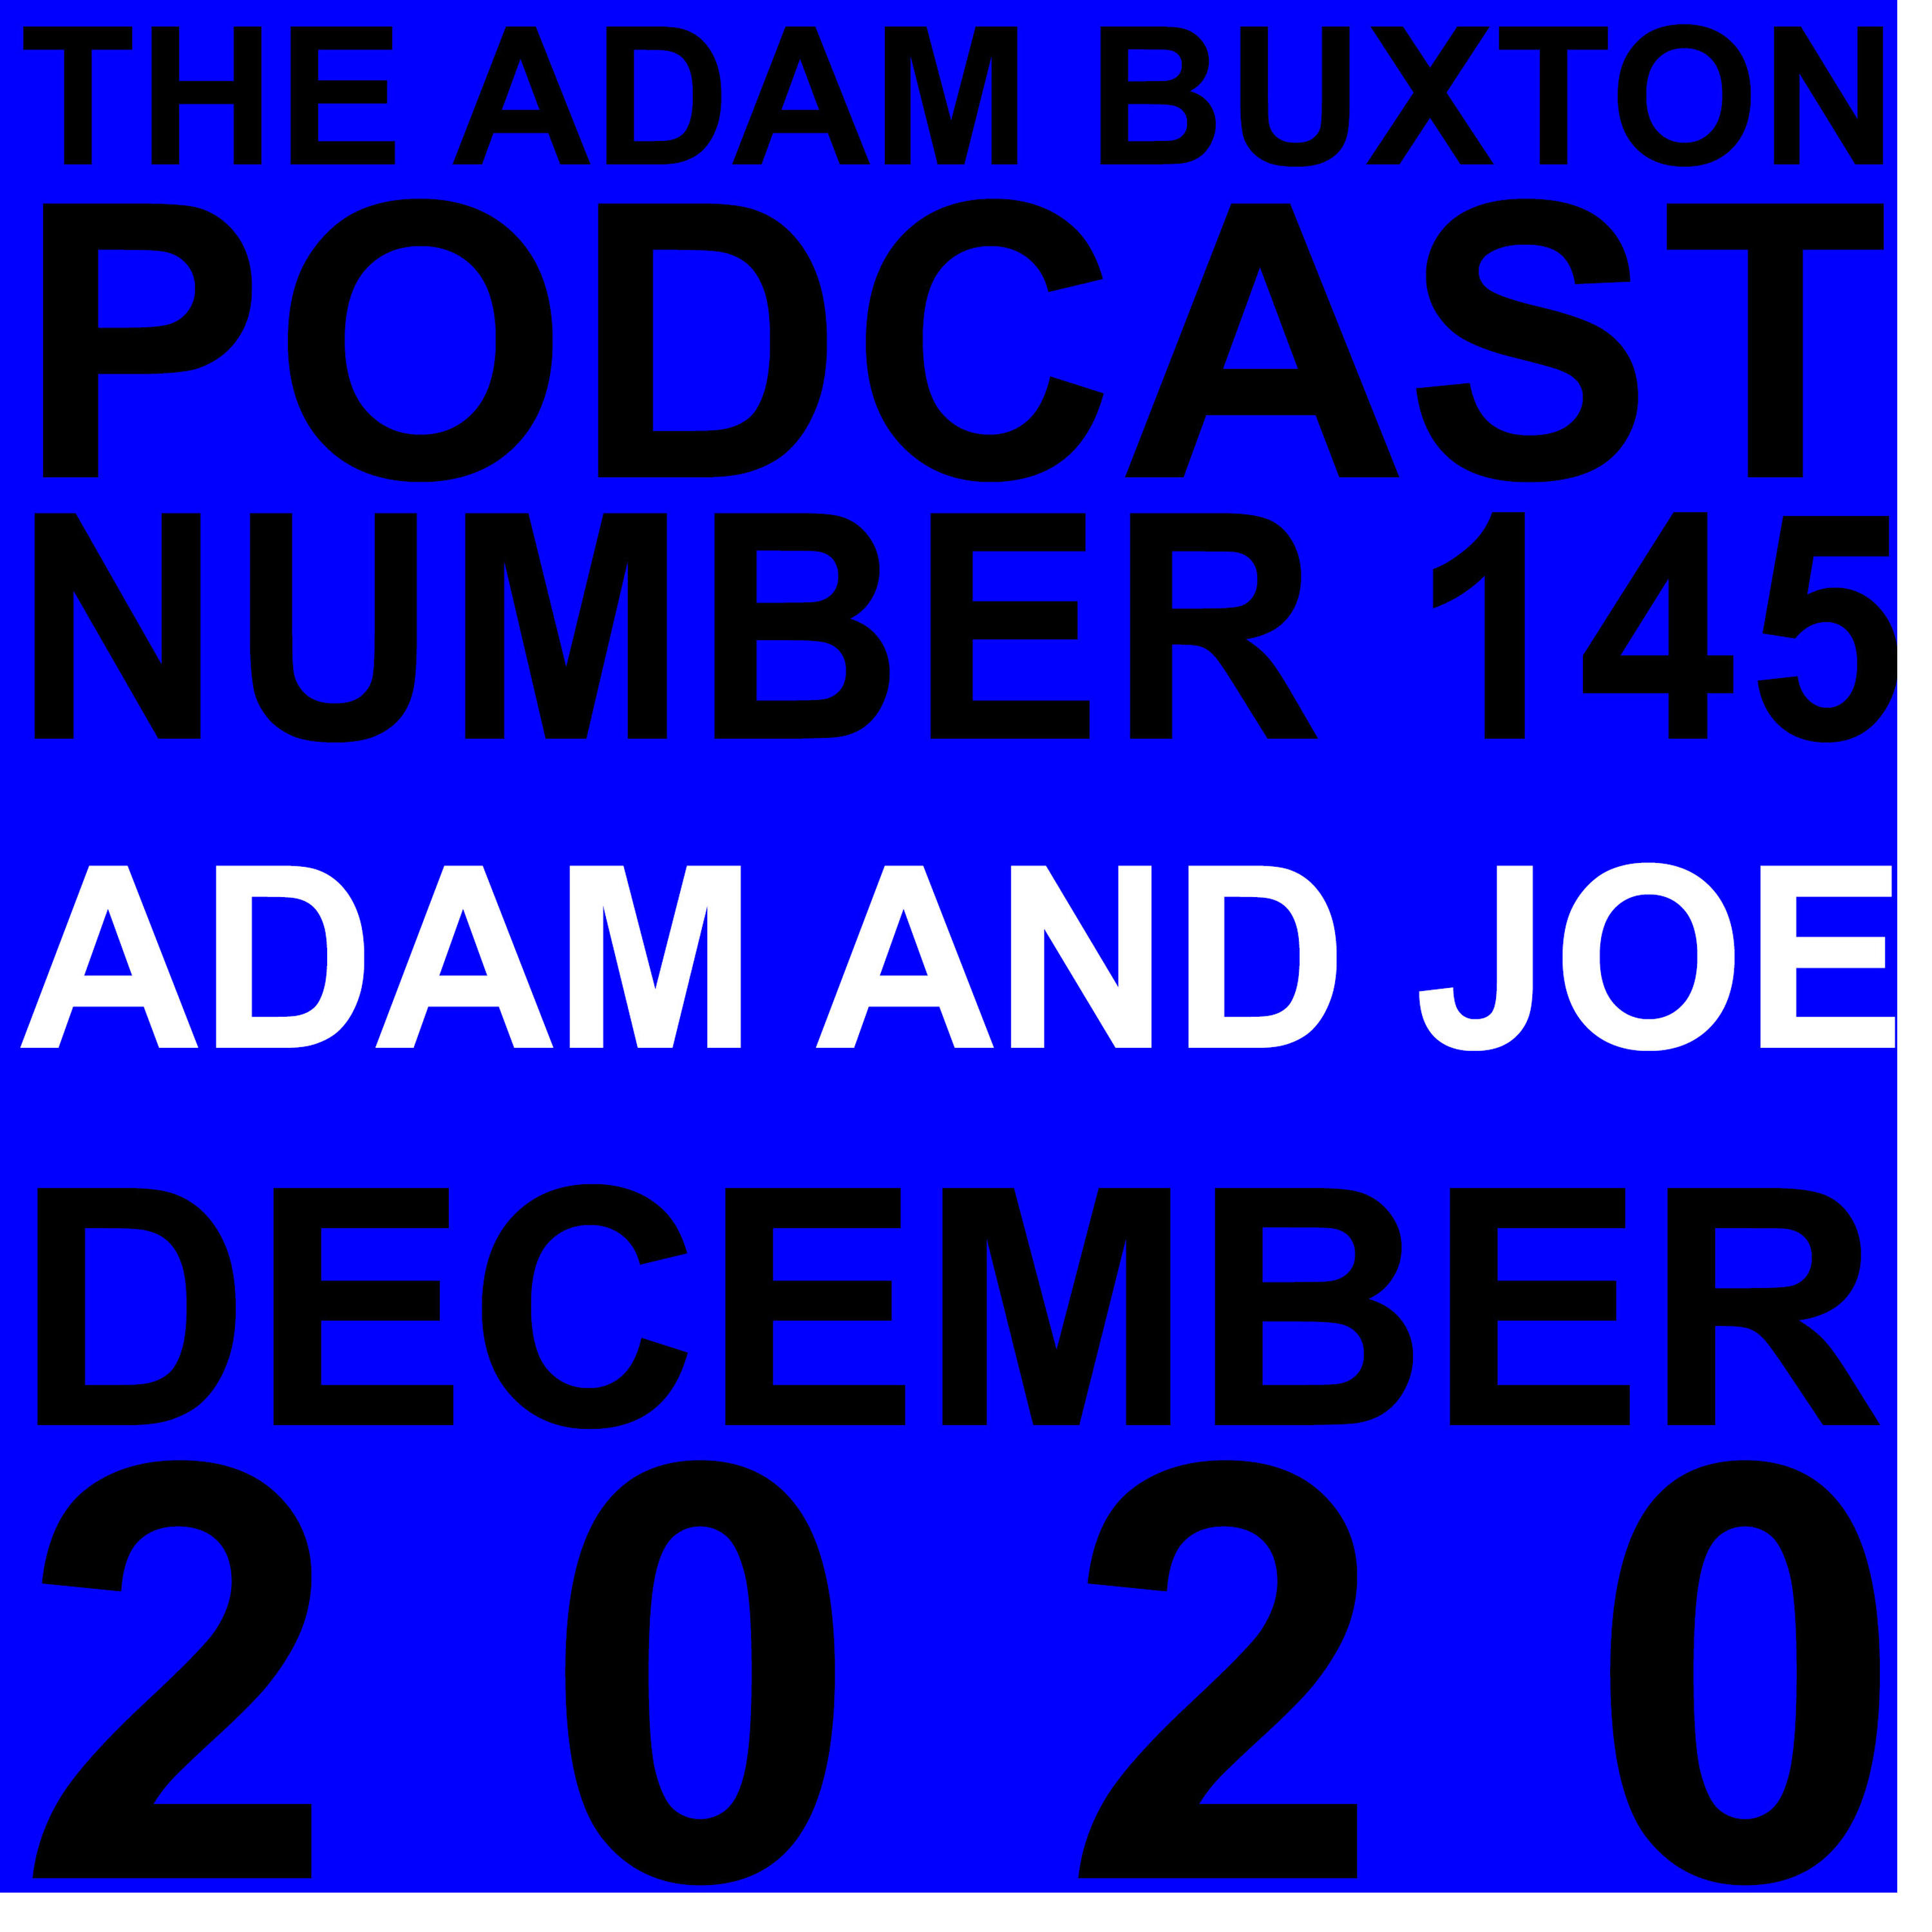 EP.145 - ADAM AND JOE